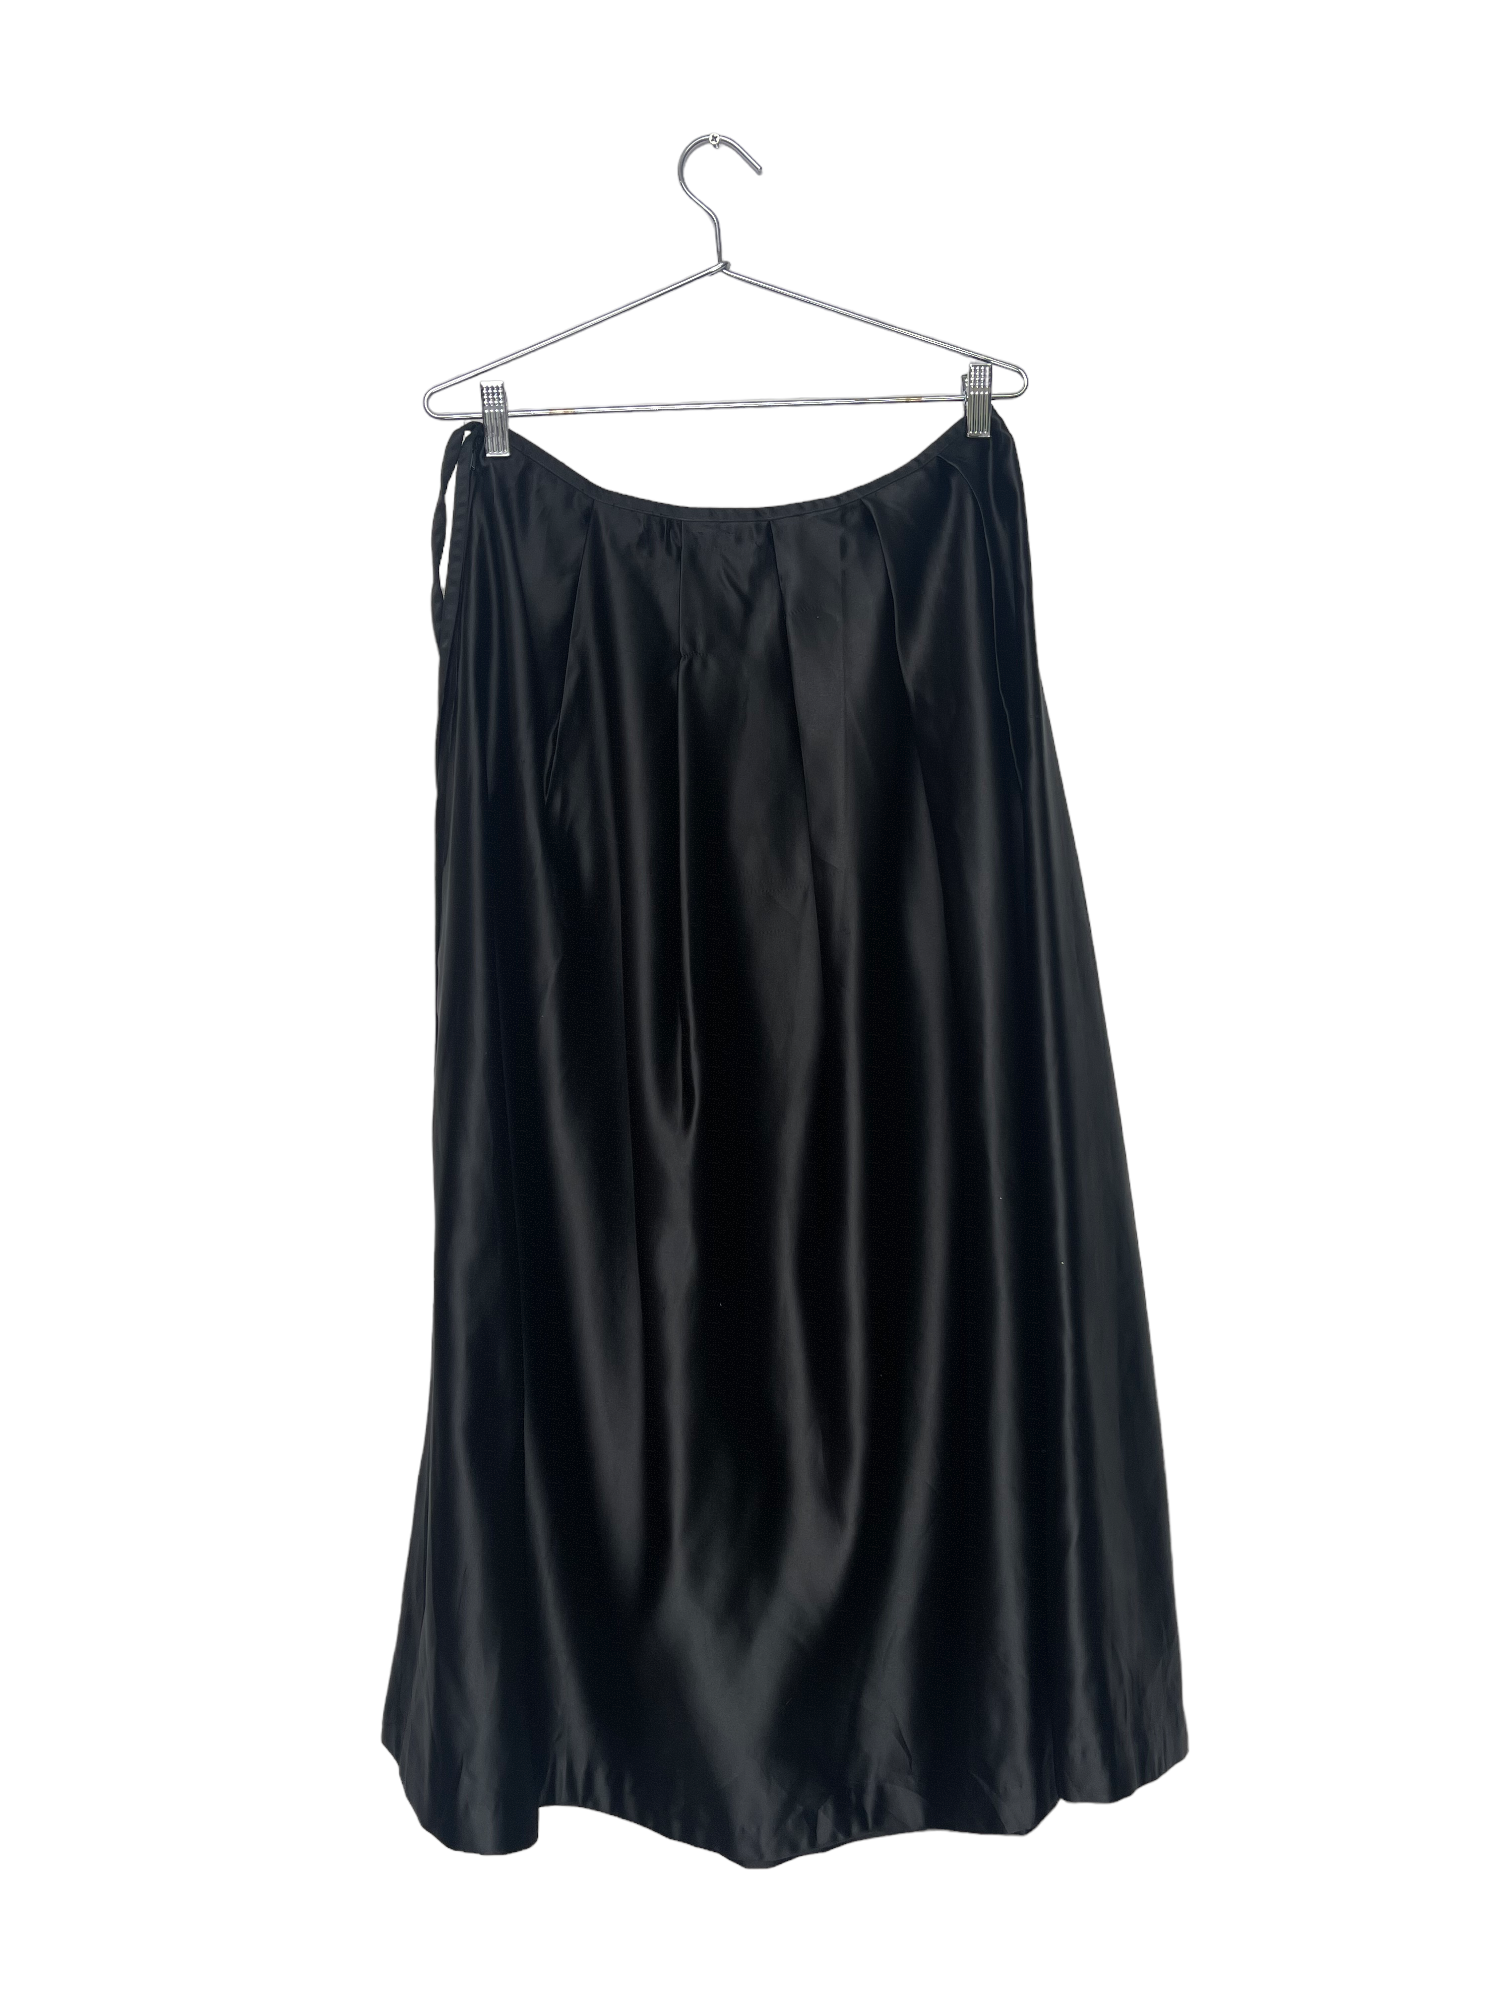 Black Satin Maxi Skirt